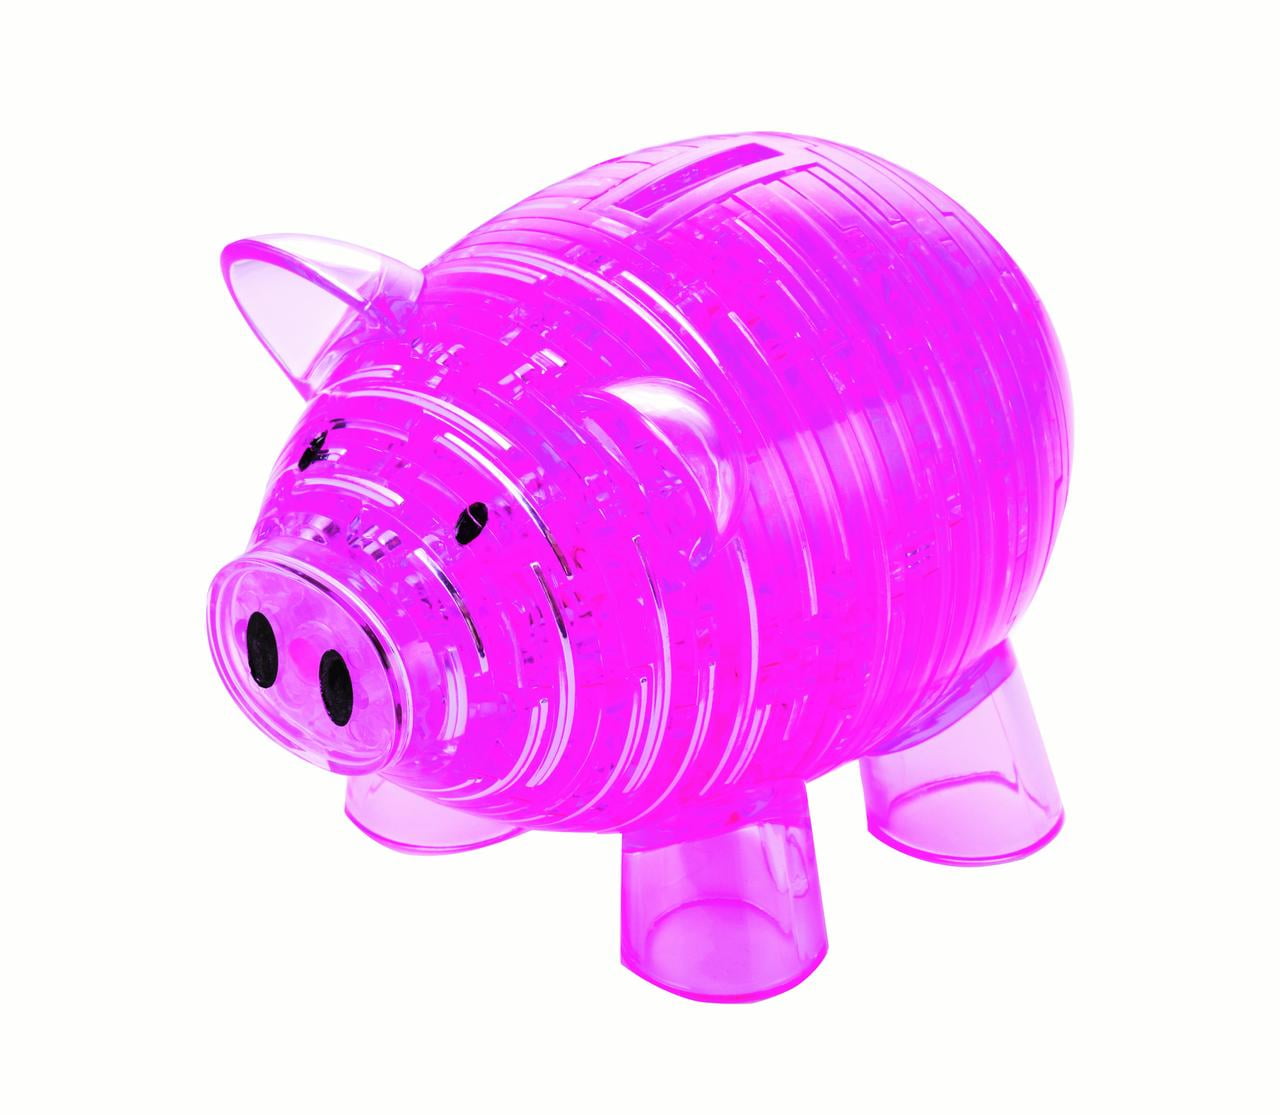 31699 PINK PIGGY BANK 3D CRYSTAL PUZZLE JIGSAW 93 PIECES FUN DISPLAY GIFT IDEA